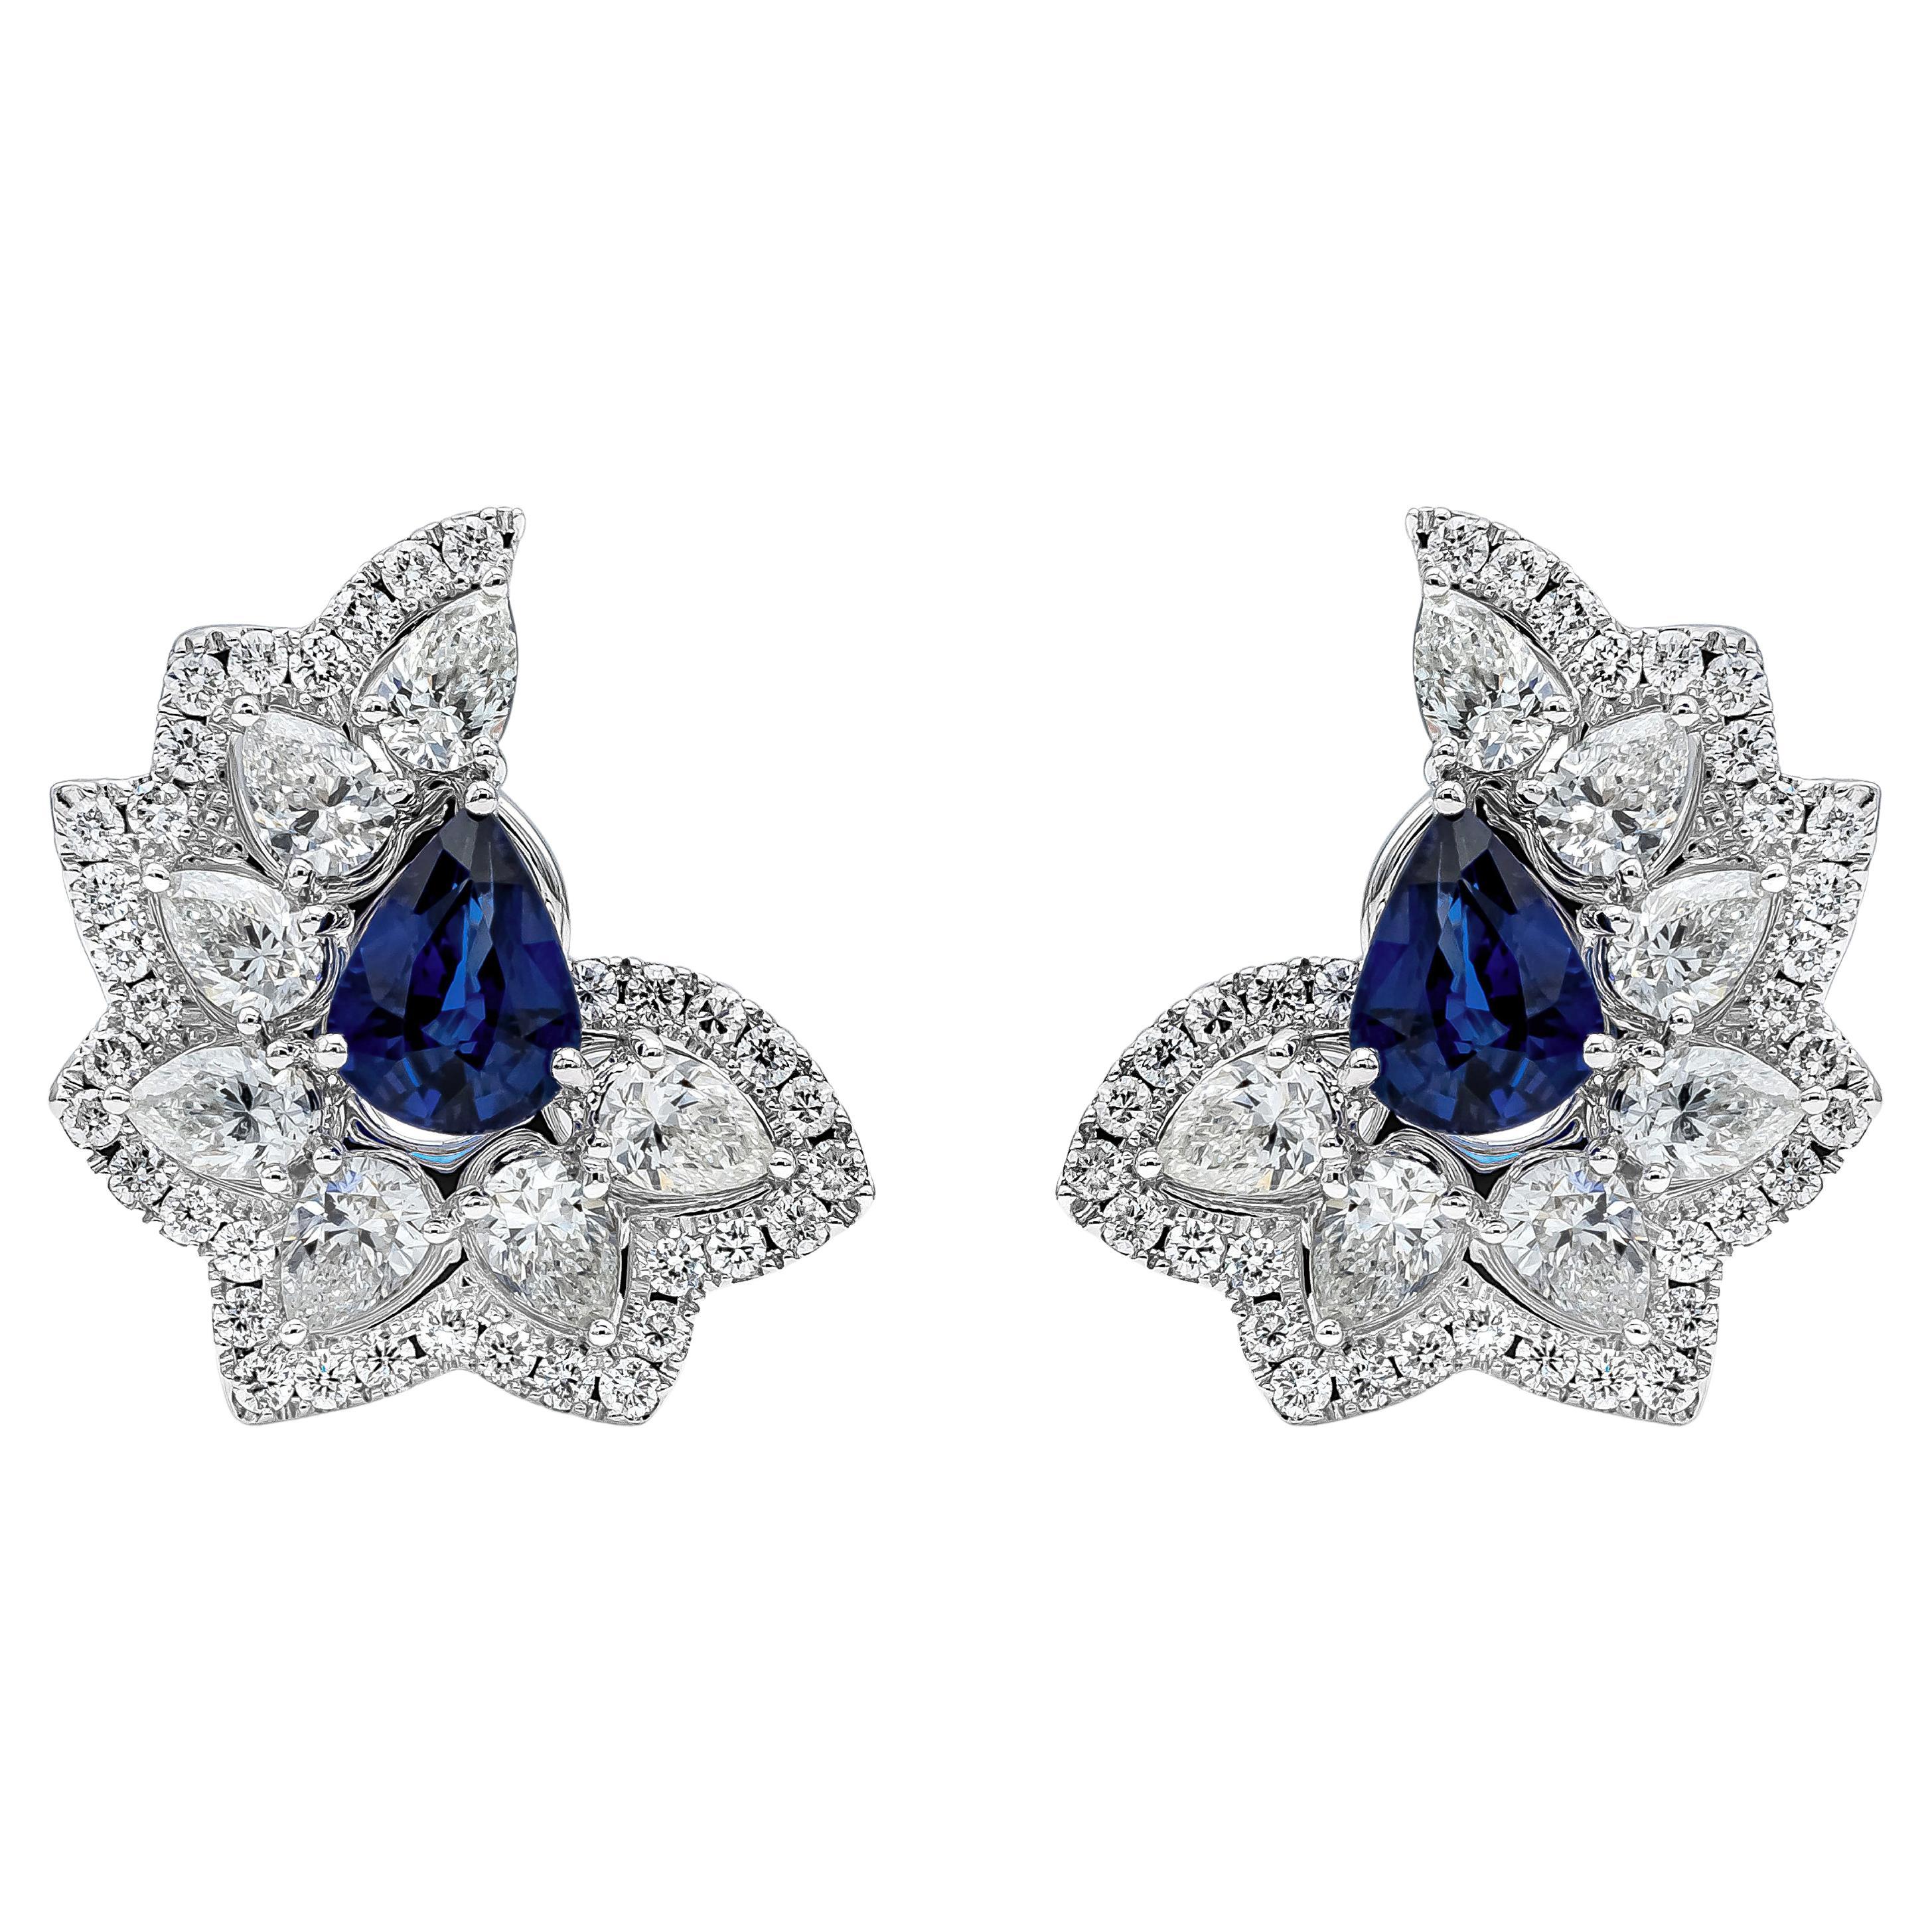 Roman Malakov 6.02 Carat Total Pear Shape Blue Sapphire and Diamond Earrings